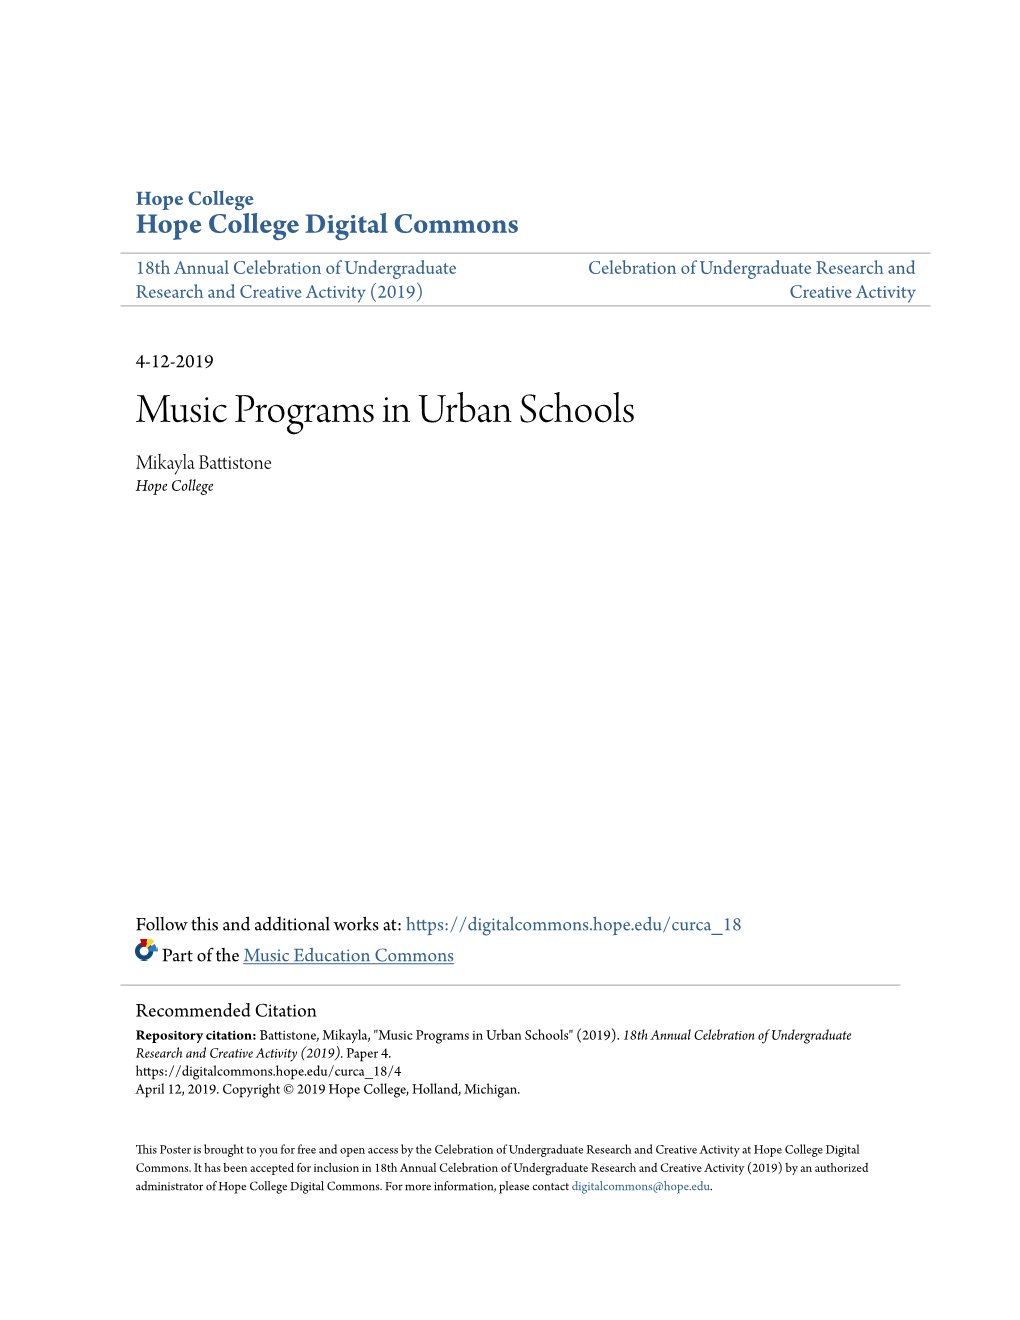 Music Programs in Urban Schools Mikayla Battistone Hope College